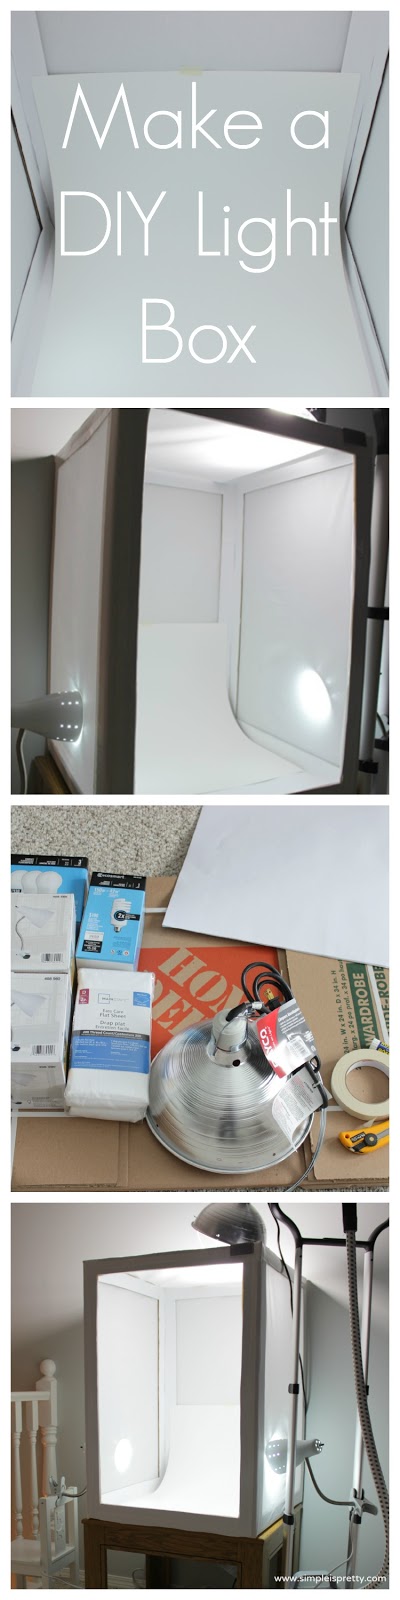 Make a DIY Light Box or Light Tent - www.simpleispretty.com